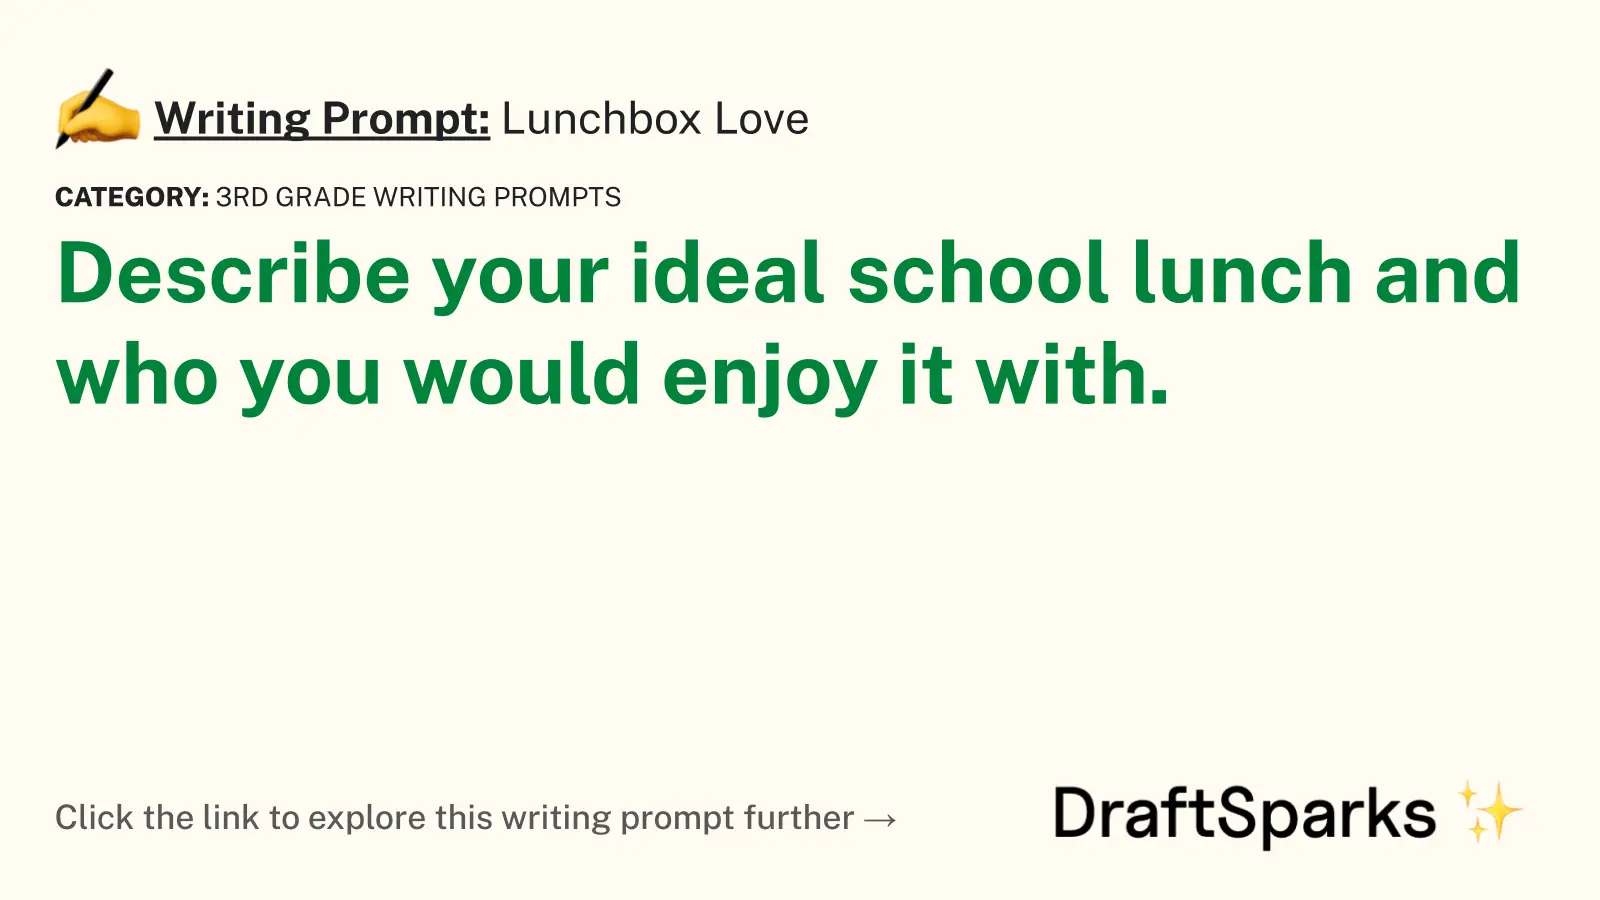 Lunchbox Love